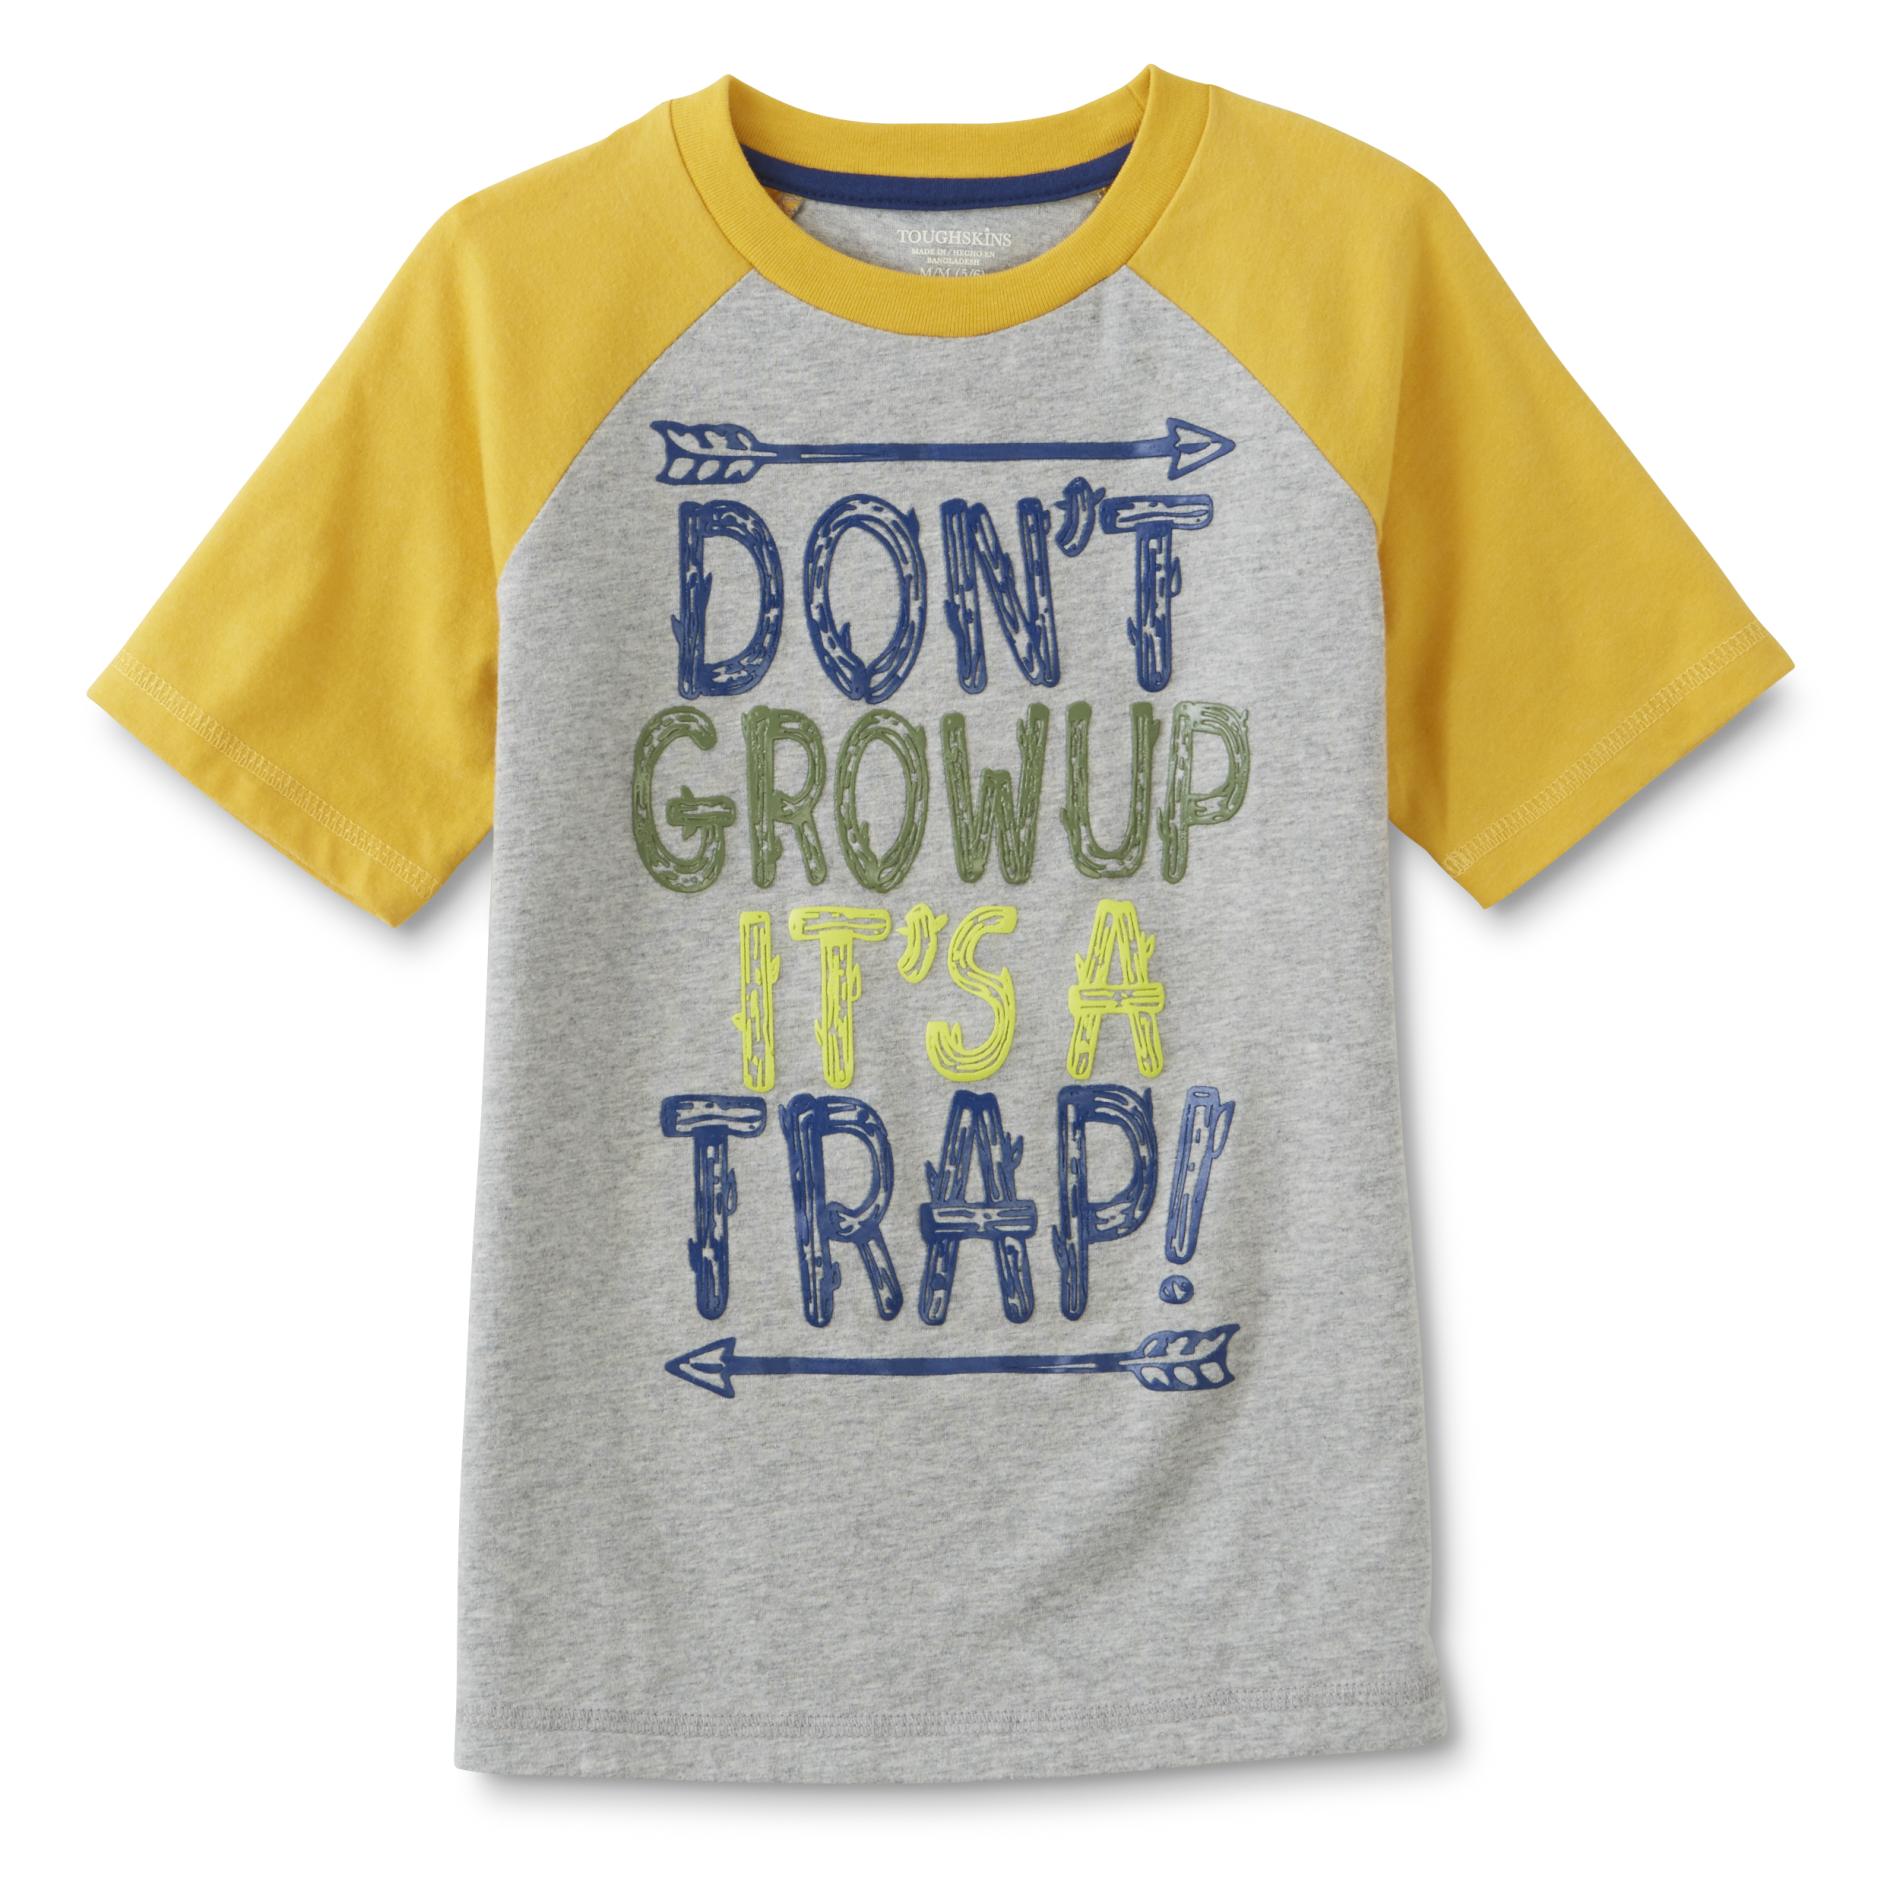 Toughskins Boy's Graphic T-Shirt - Don't Grow Up